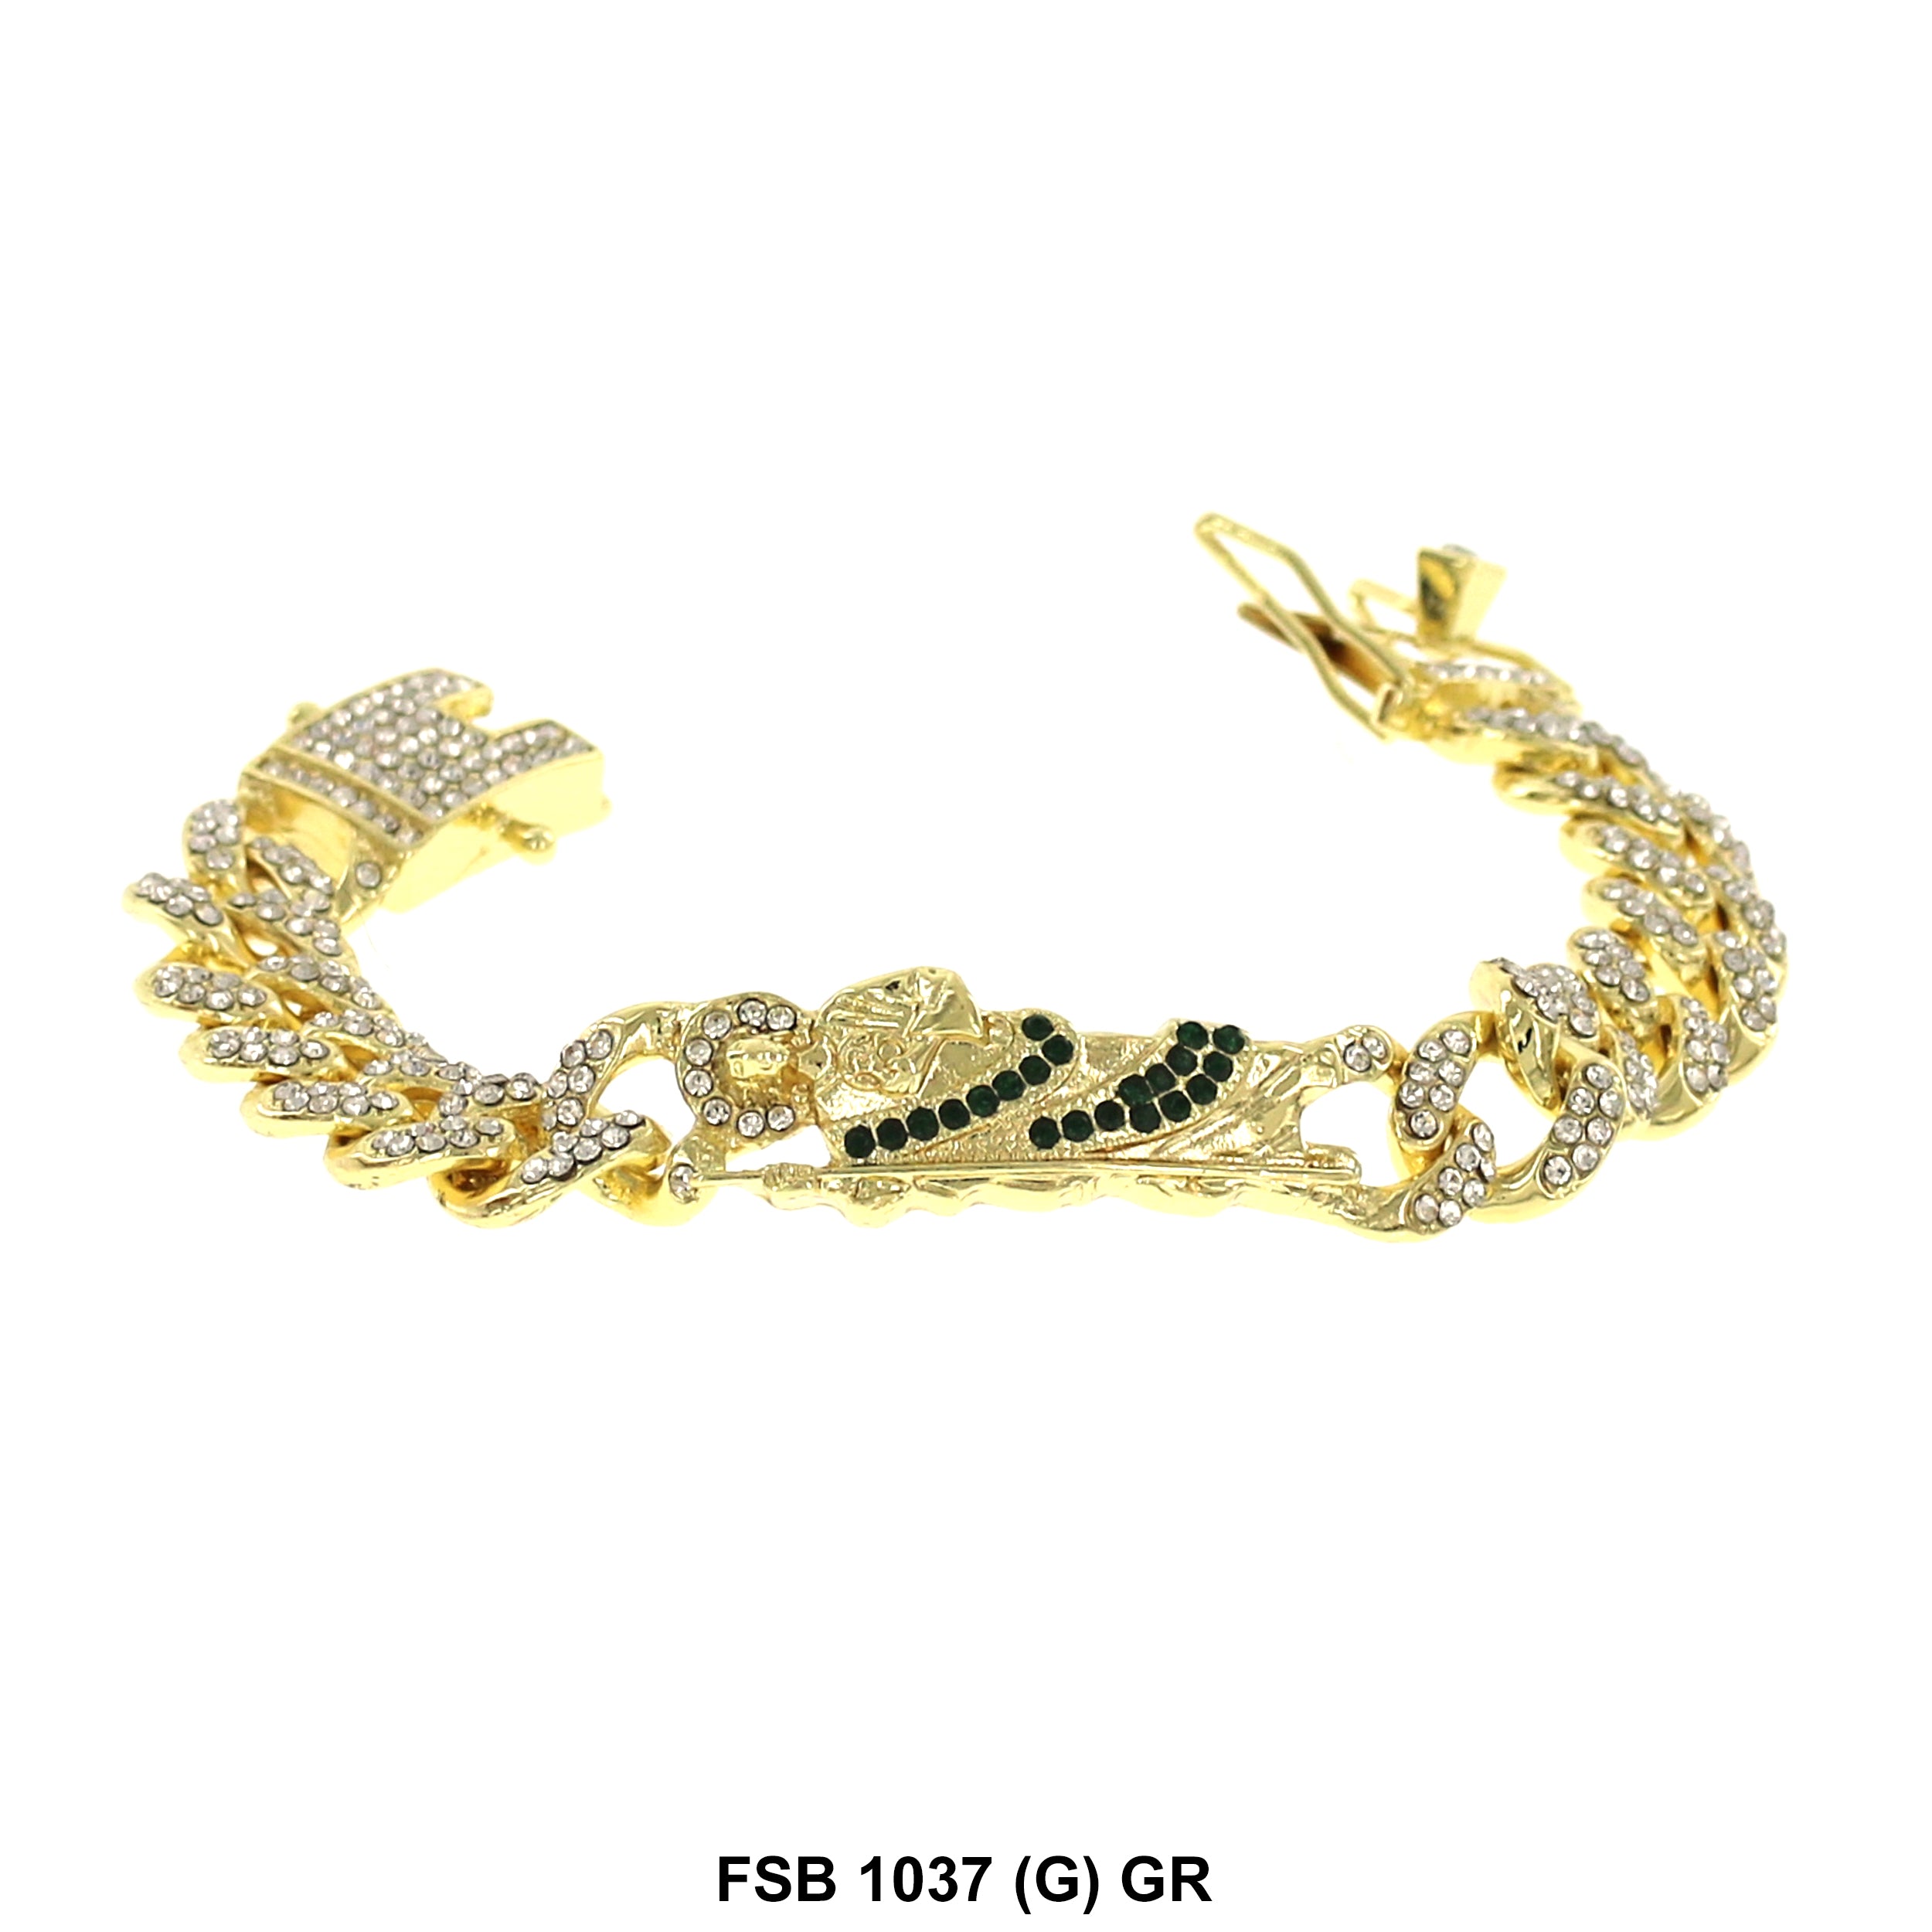 San Judas Stones Bracelet FSB 1037 (G) GR